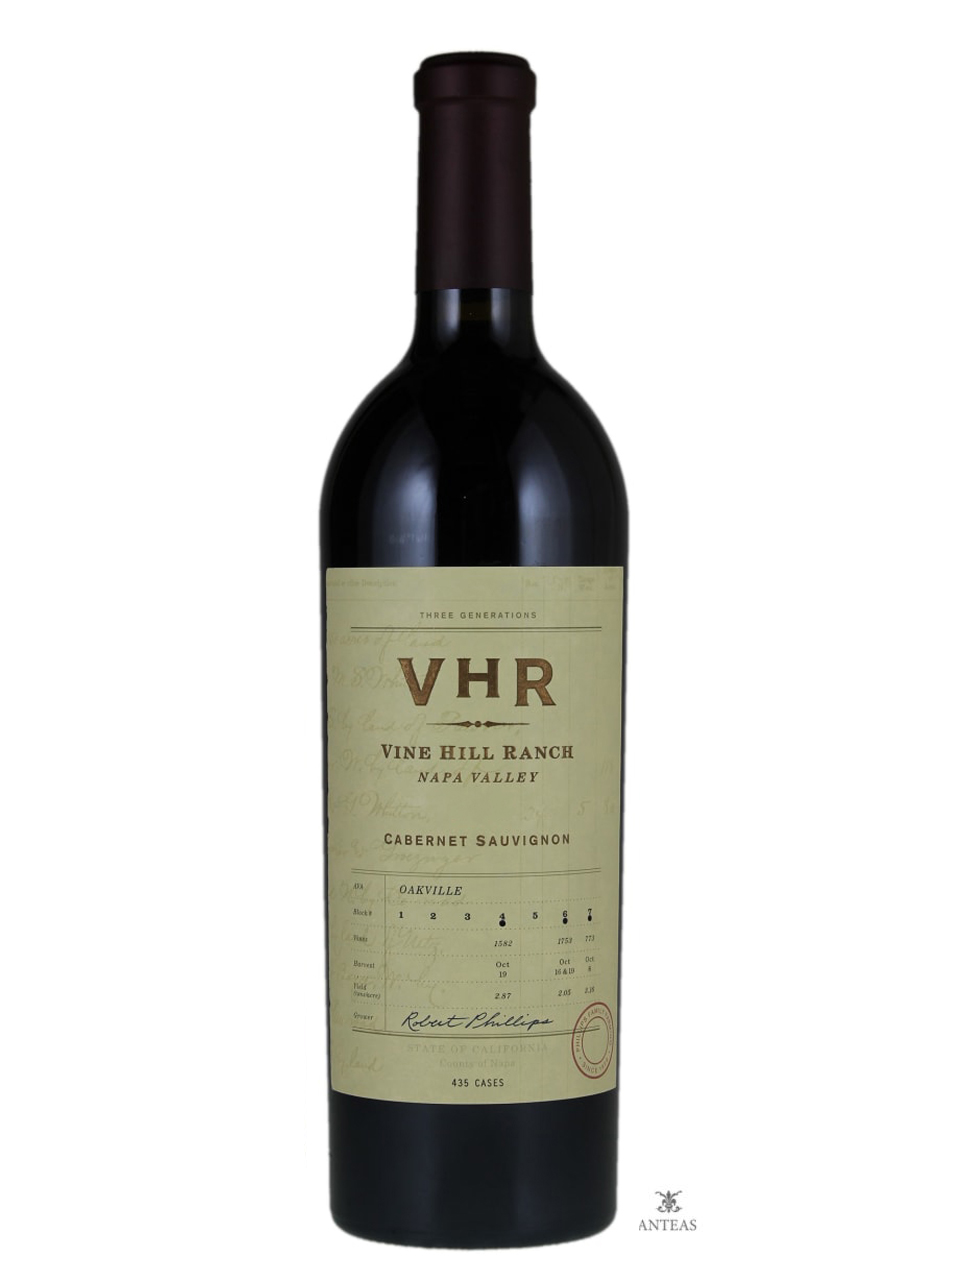 Vine Hill Ranch 'VHR' Cabernet Sauvignon 2013